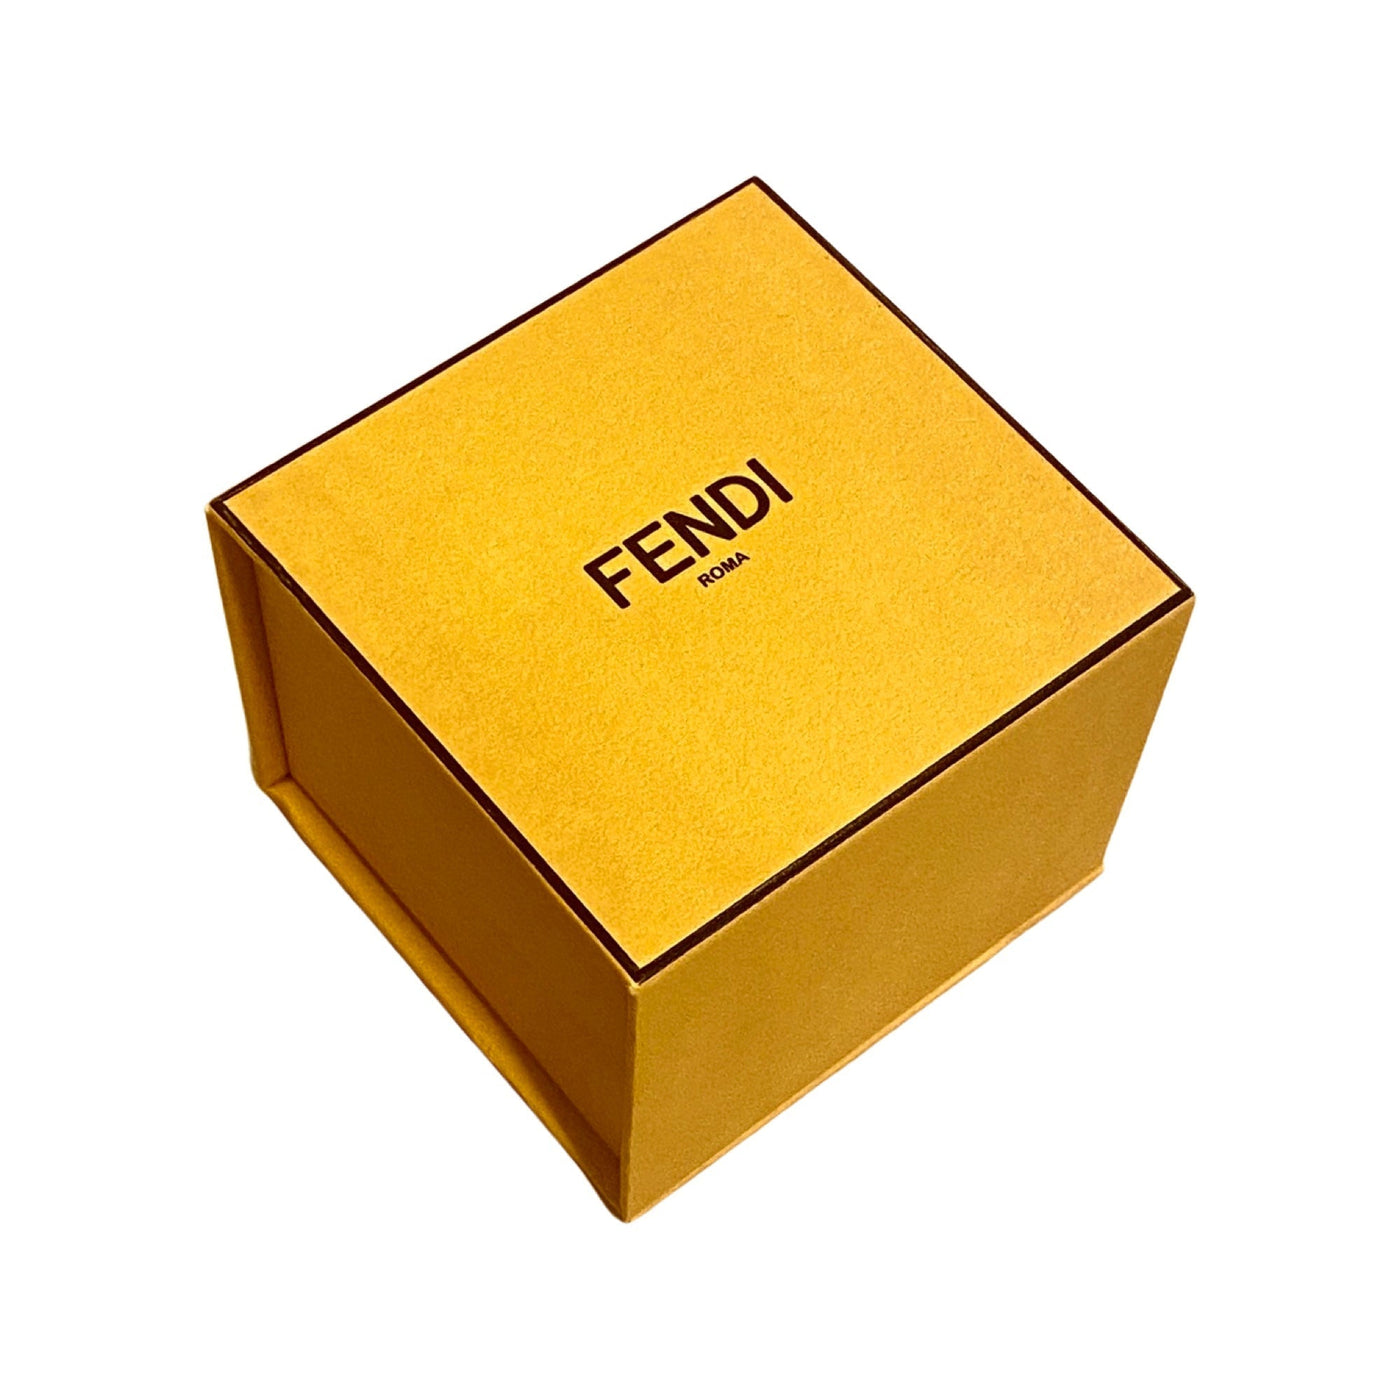 Fendi Master Key Light Rose Leather Gold Medium Bracelet - LUXURYMRKT